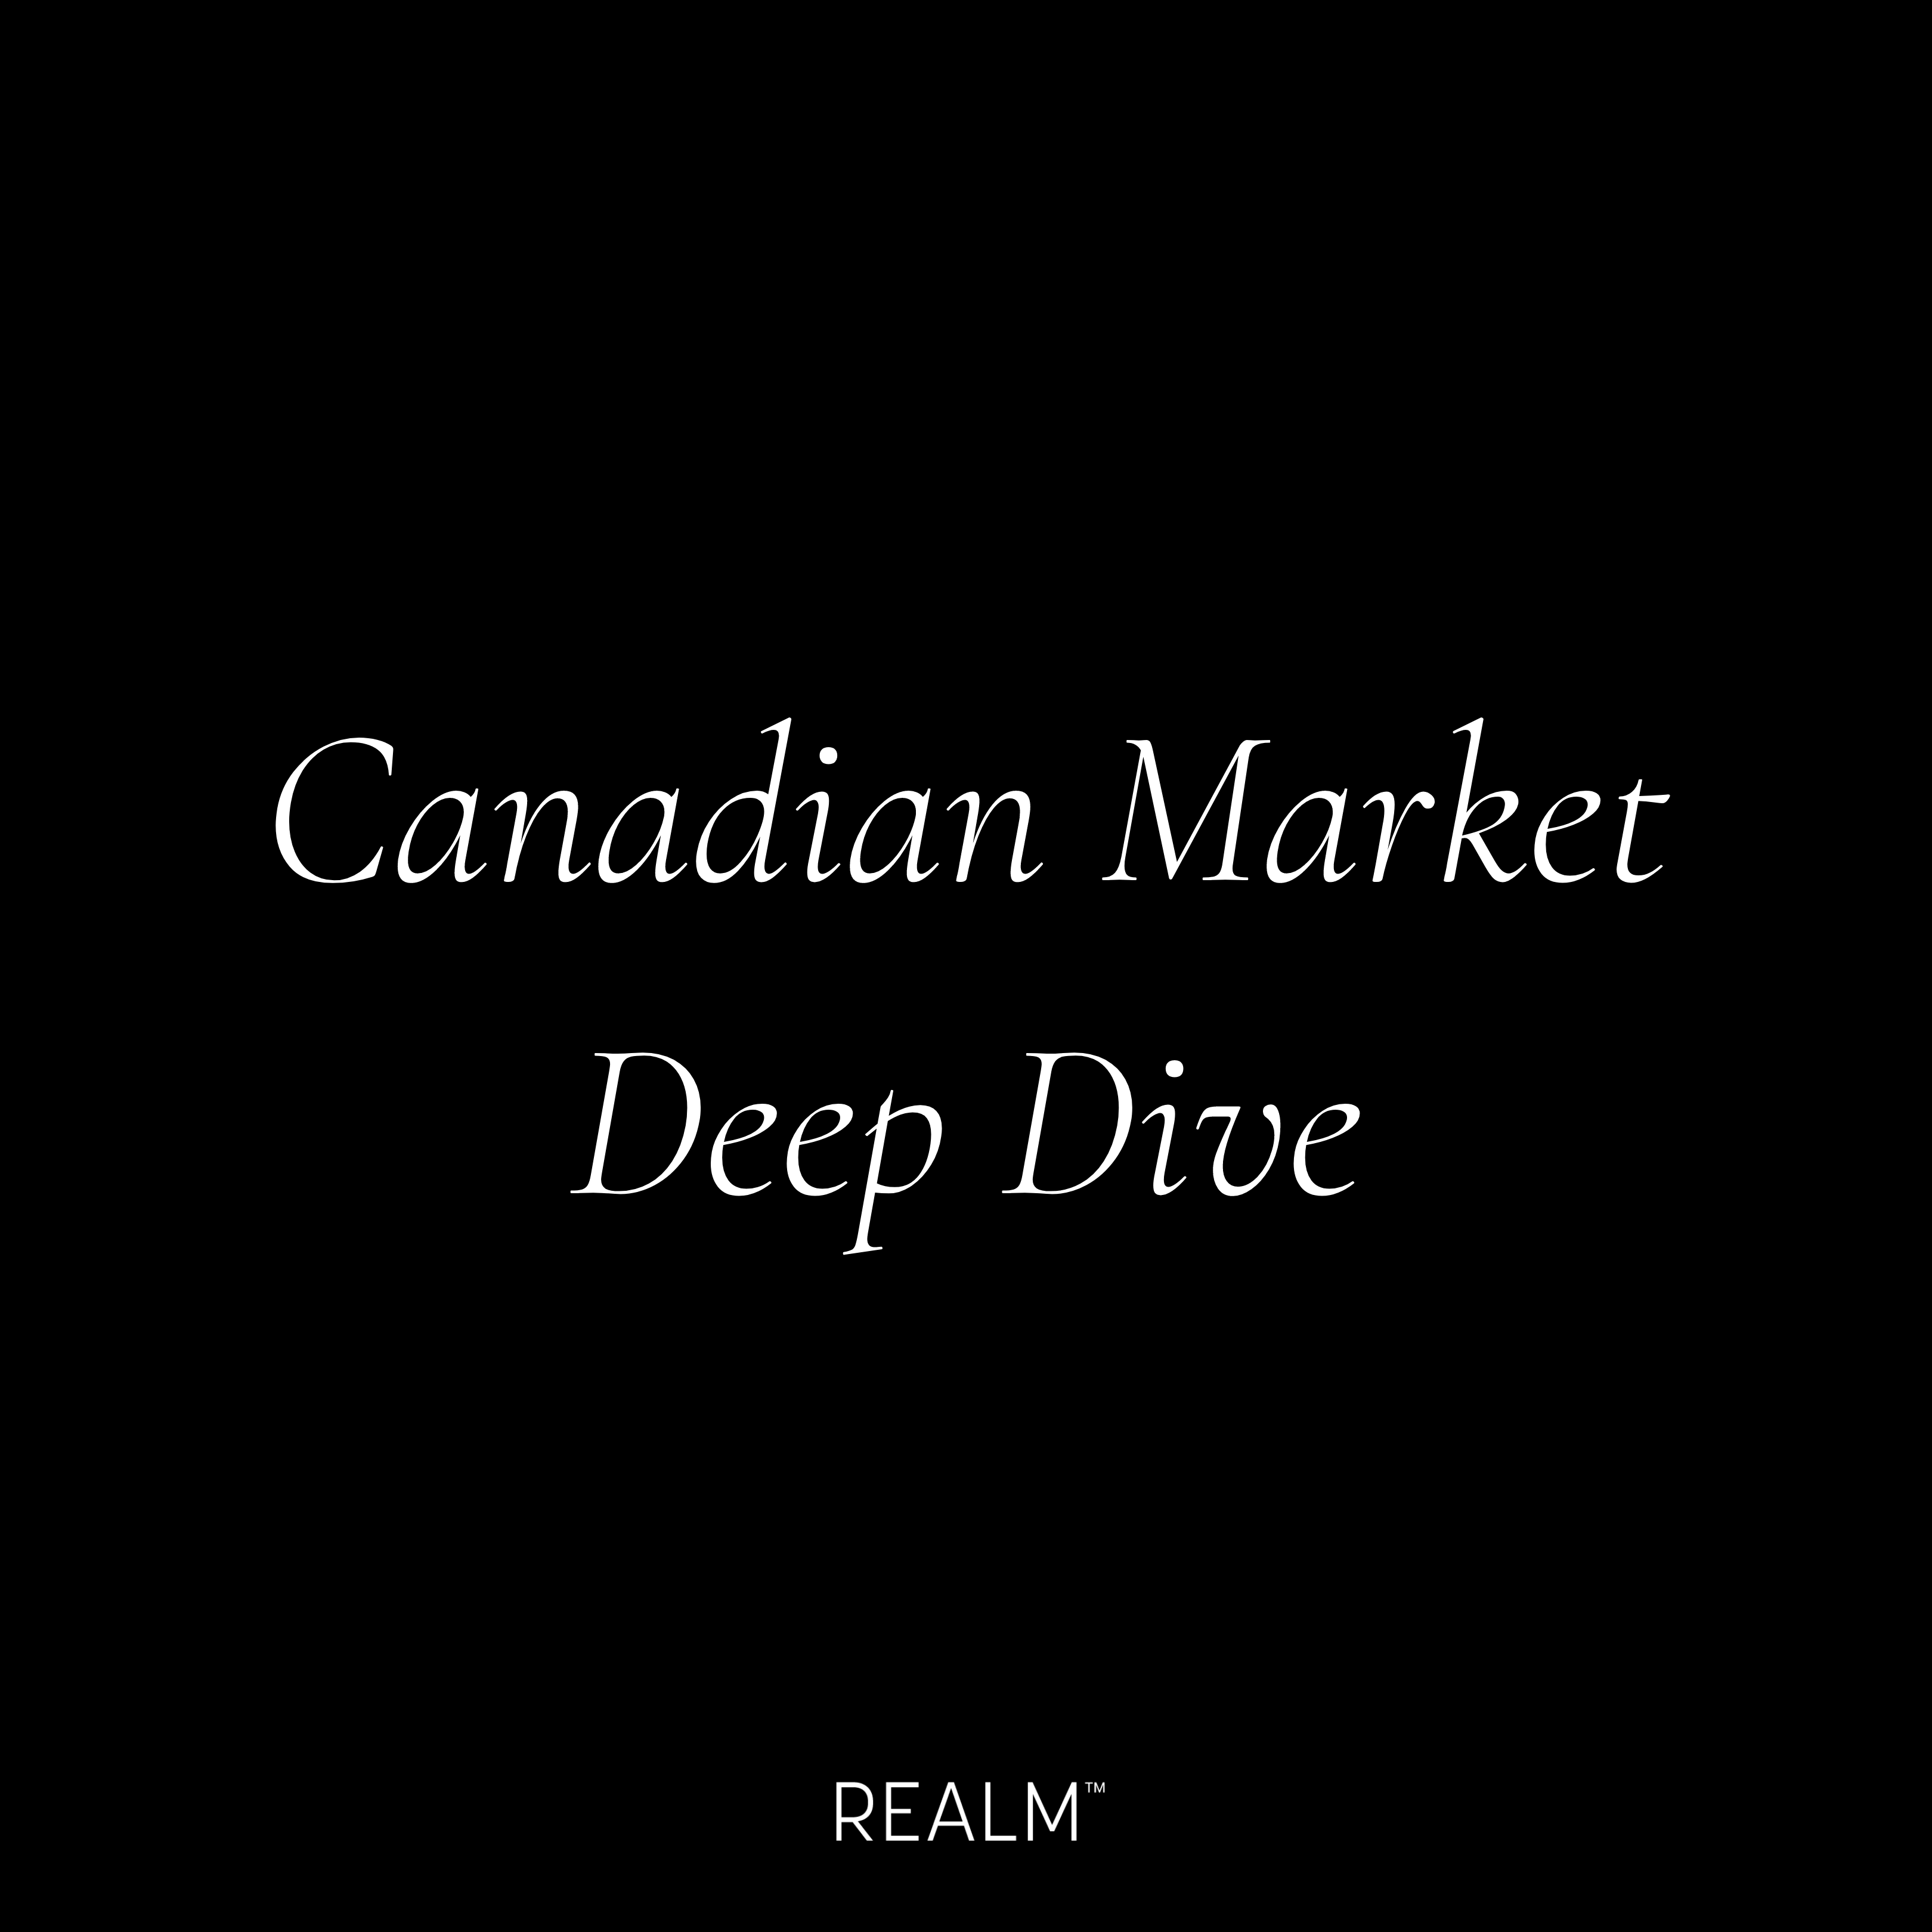 Canadian Market Deep Dive